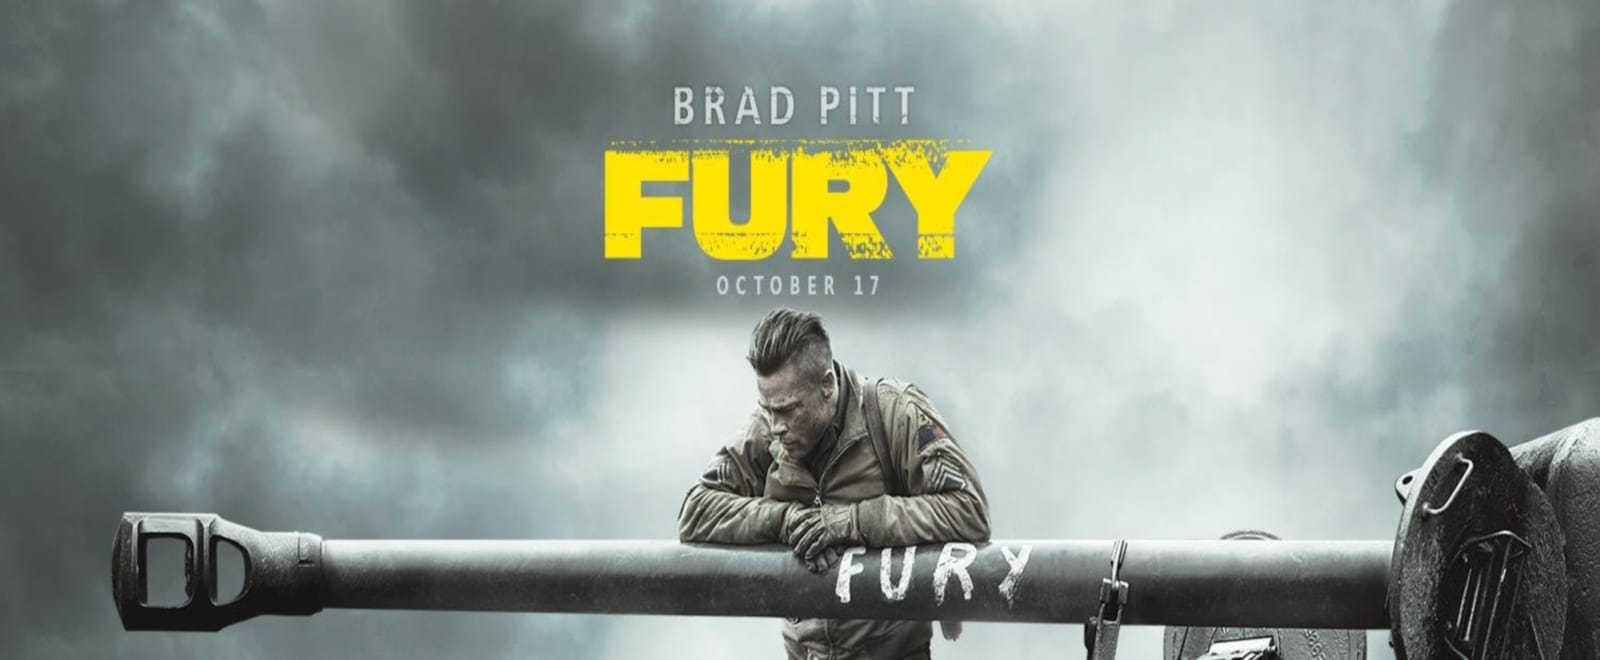 Credit: Fury Movie 2014.com